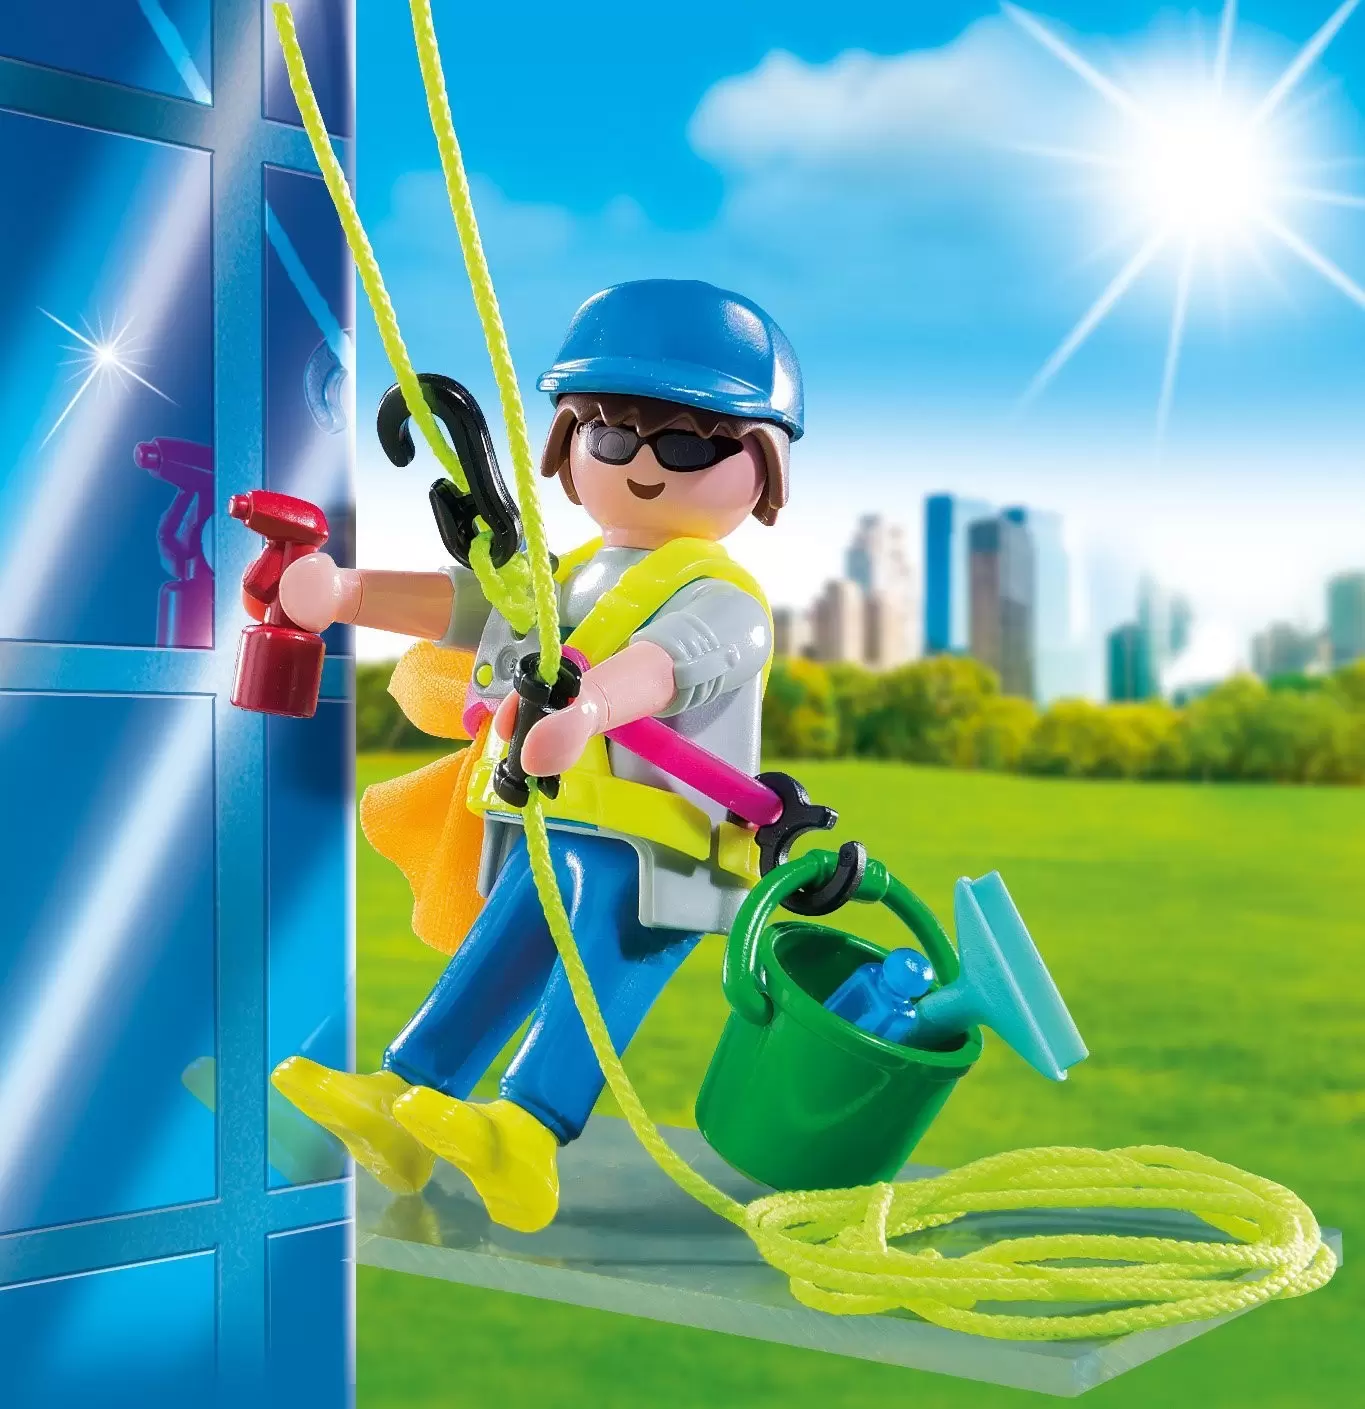 Playmobil SpecialPlus - Window Cleaner